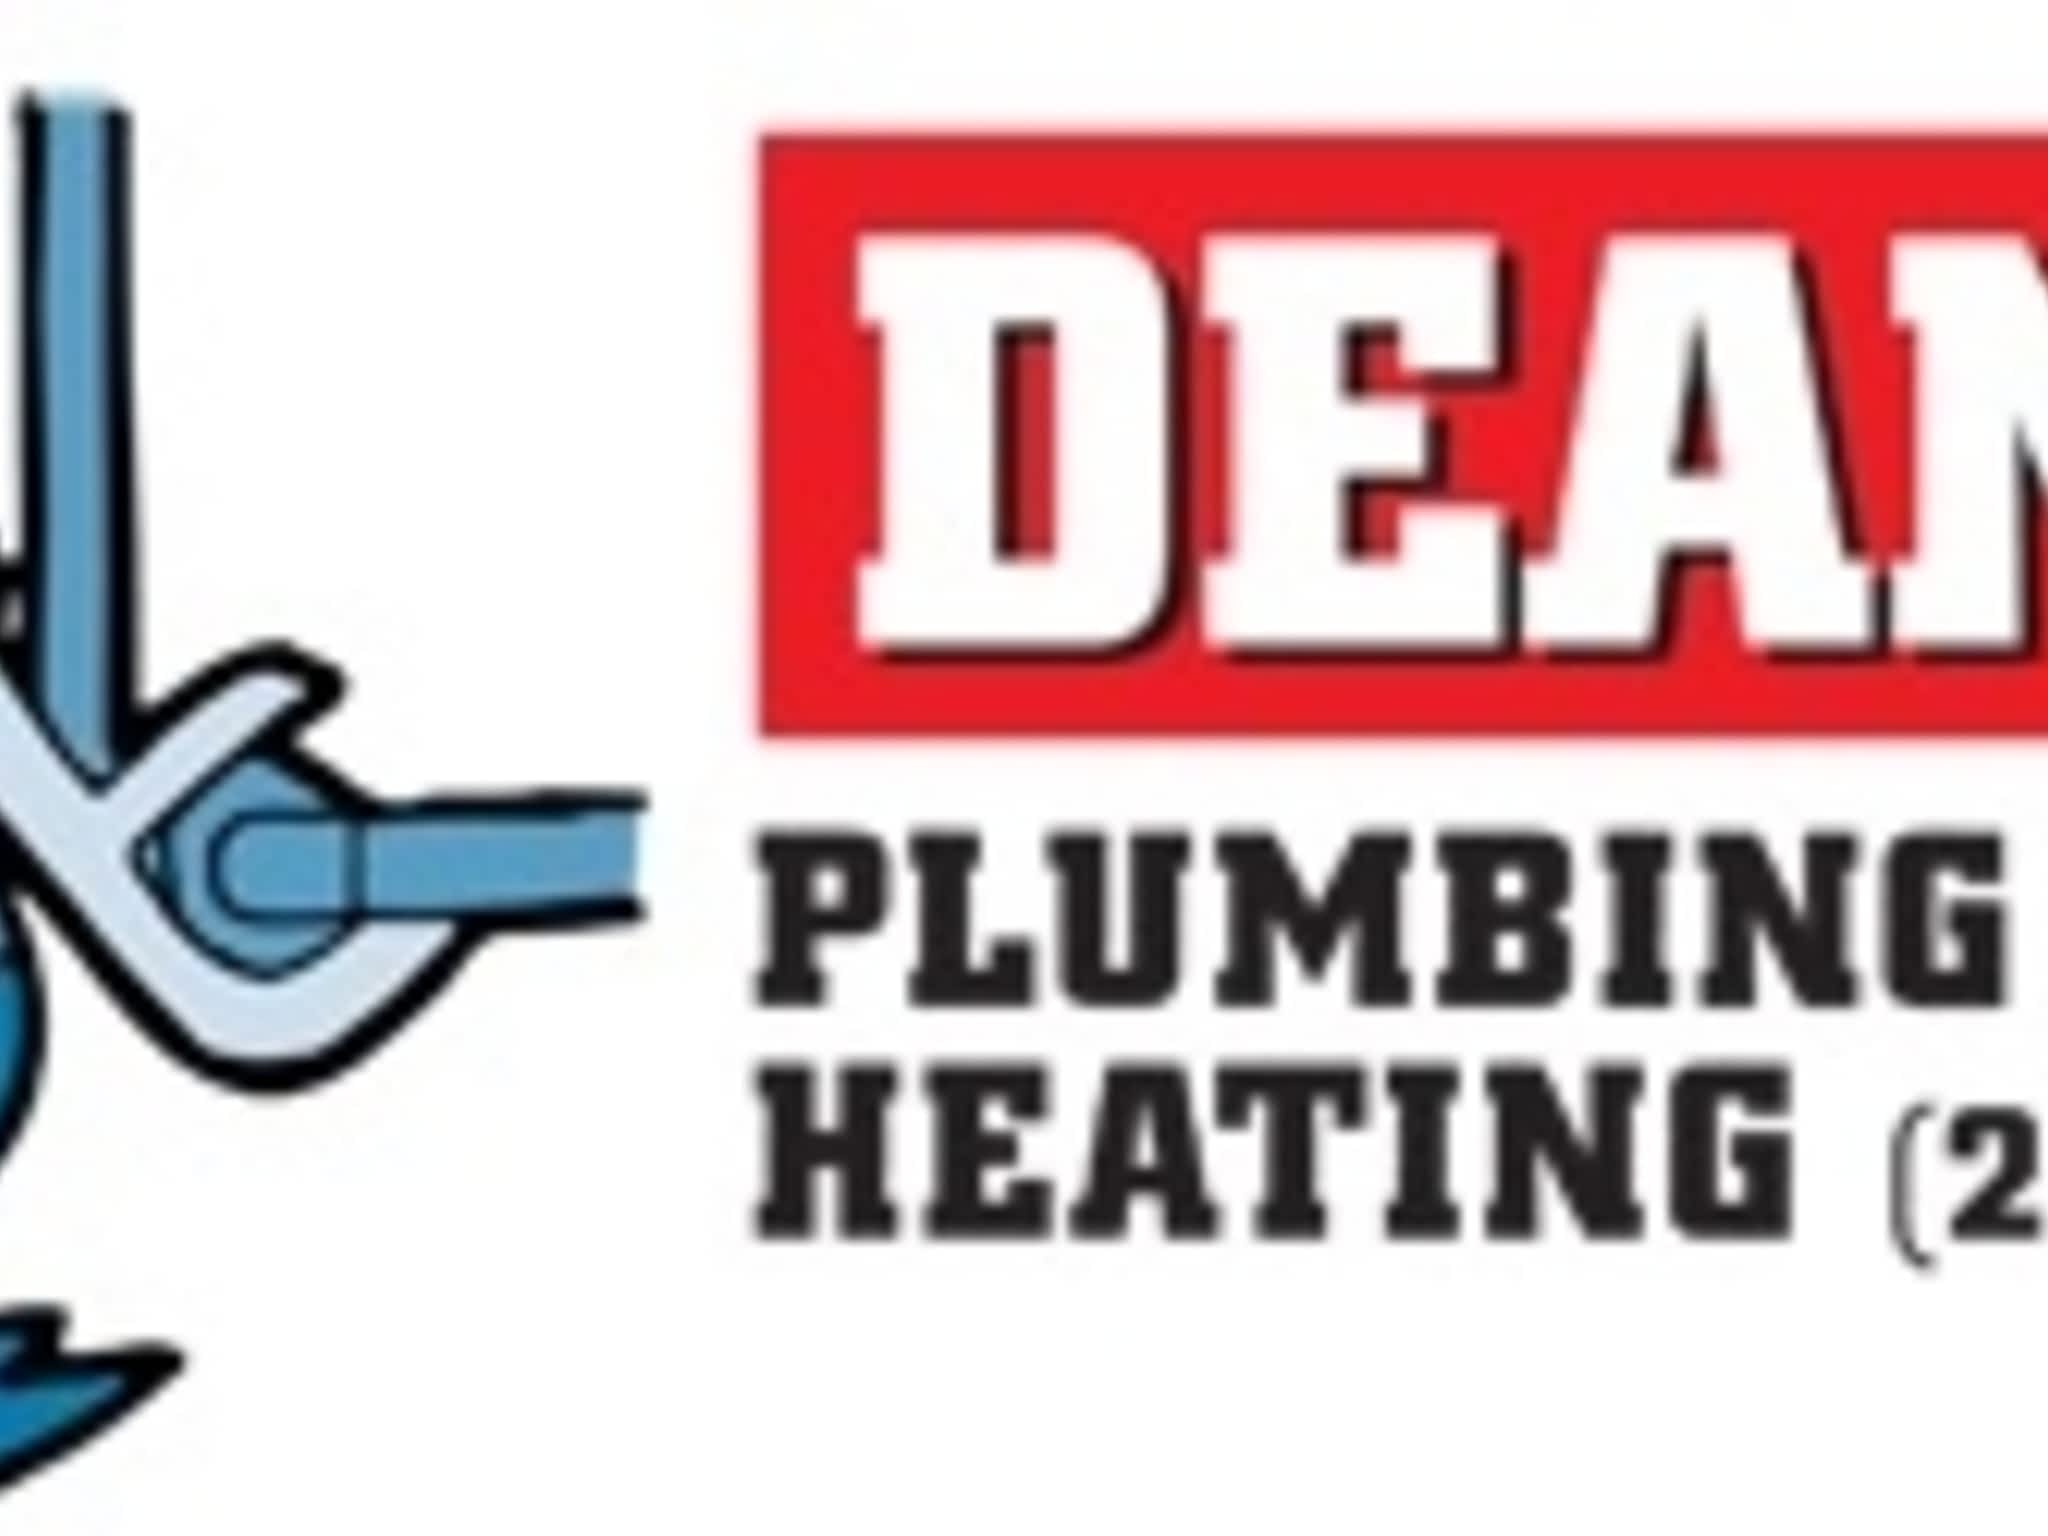 photo Dean's Plumbing & Heating (2010) Ltd